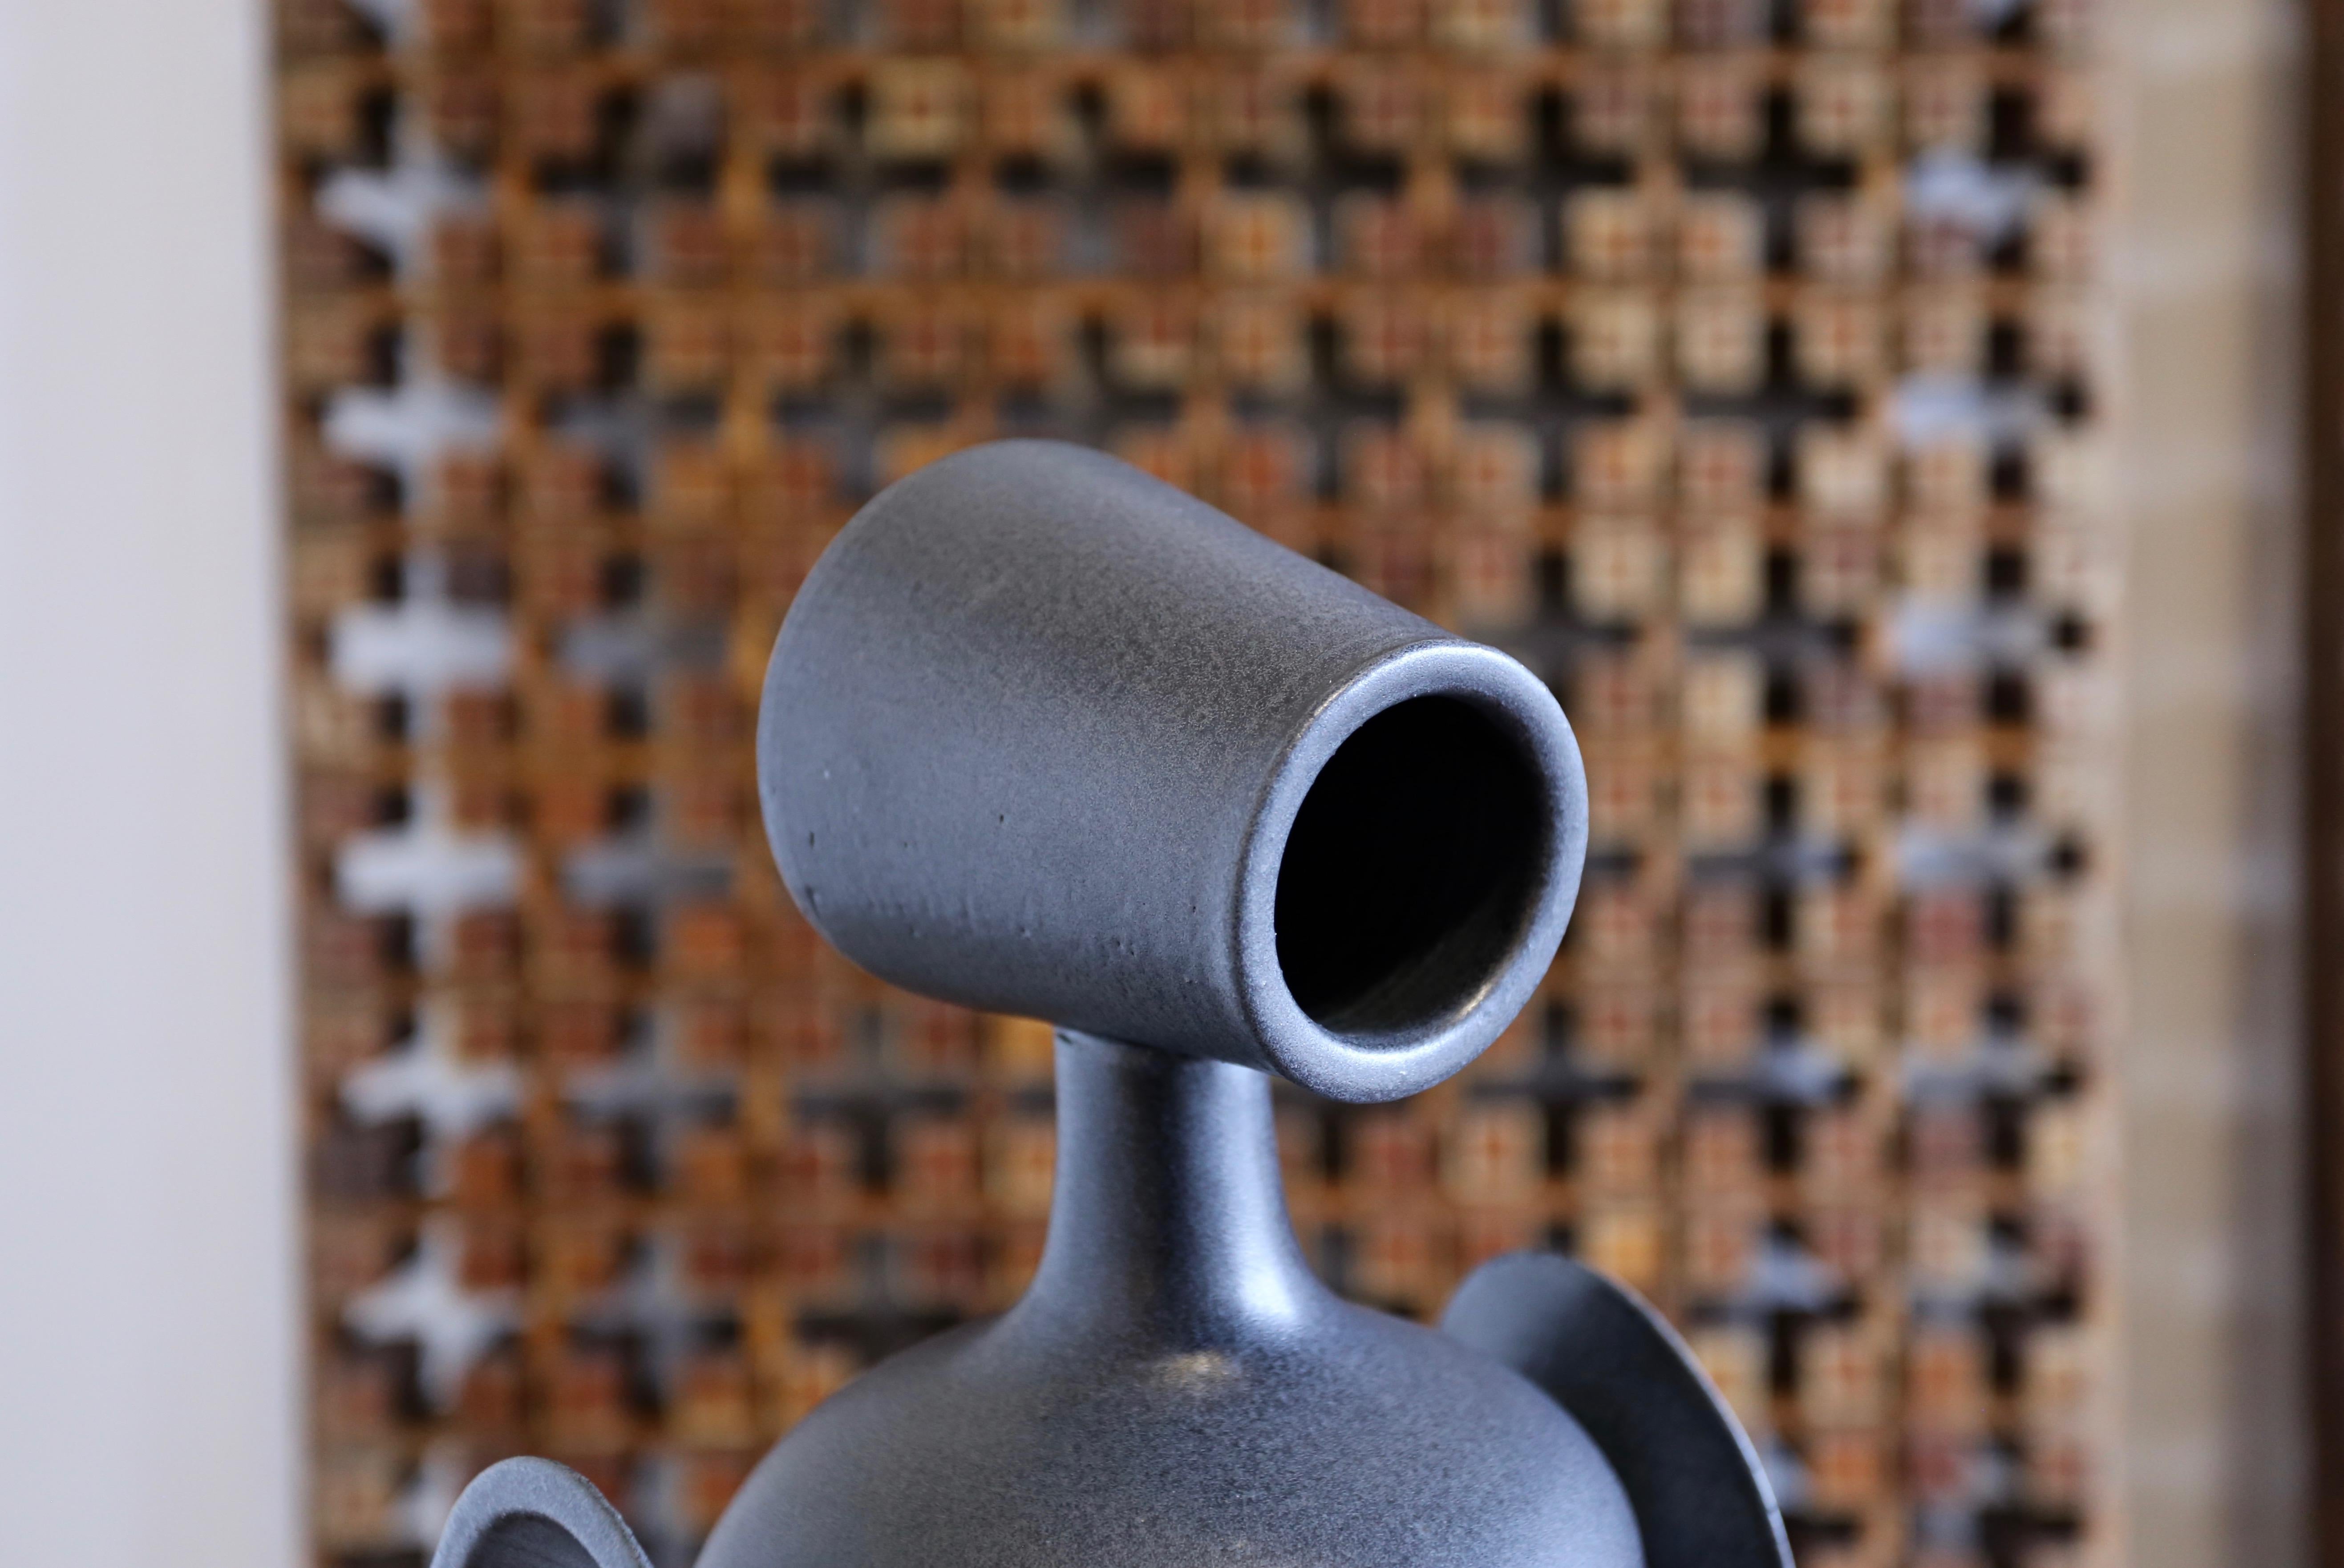 Tim Keenan ceramic sculpture, 2019.